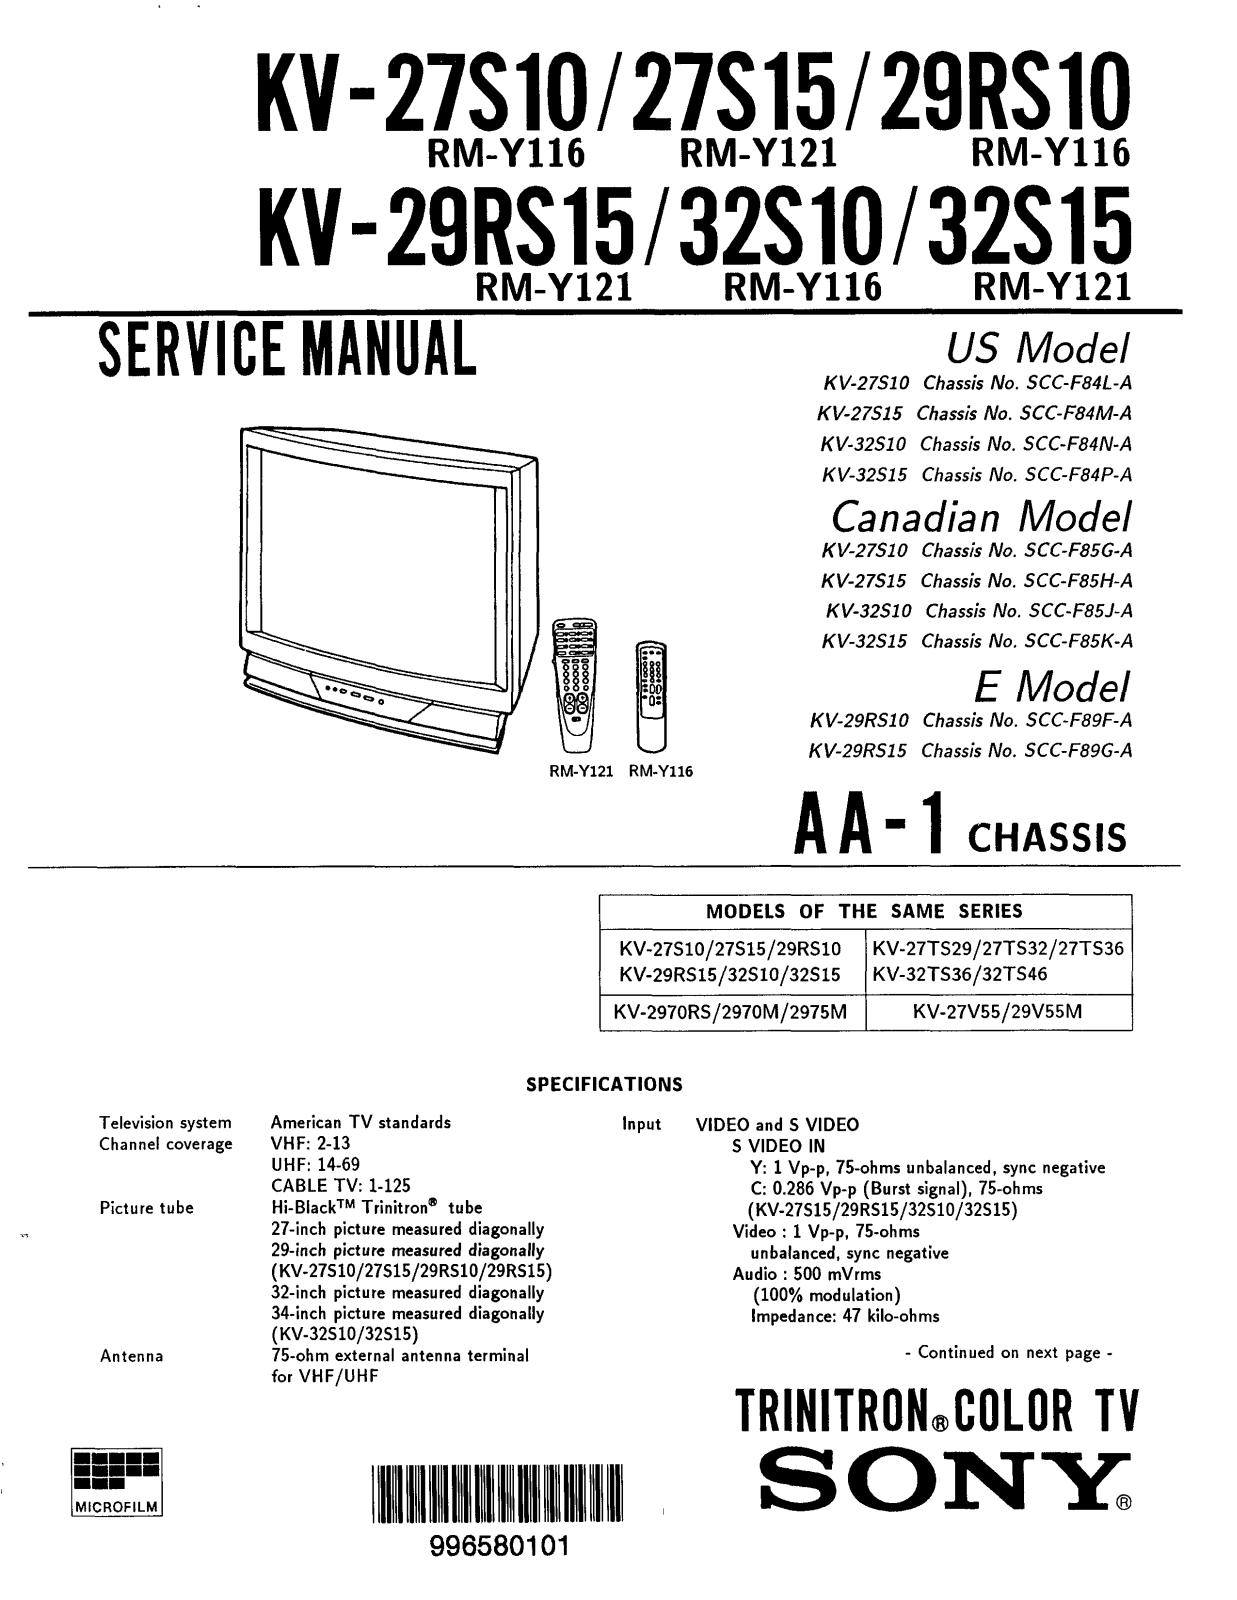 Sony KV-32S15, KV-32S10, KV-29RS15, KV-29RS10, AA-1 Service Manual